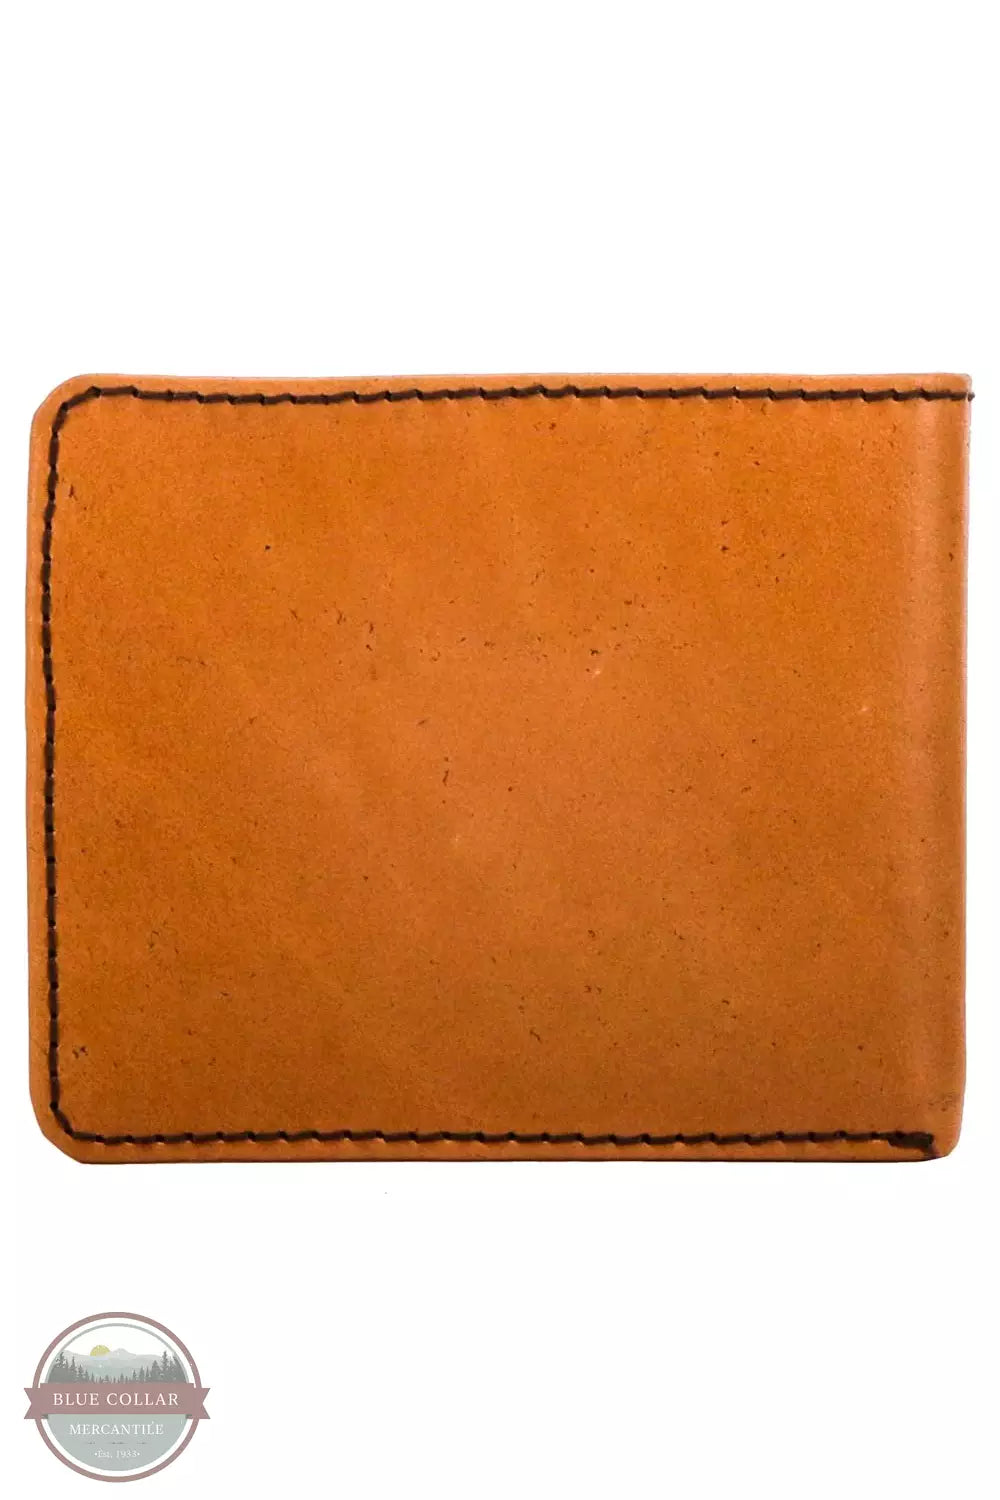 Hooey HBF008-TNBR Top Notch Tooled Bi-Fold Wallet in Tan/Brown/Ivory Back View